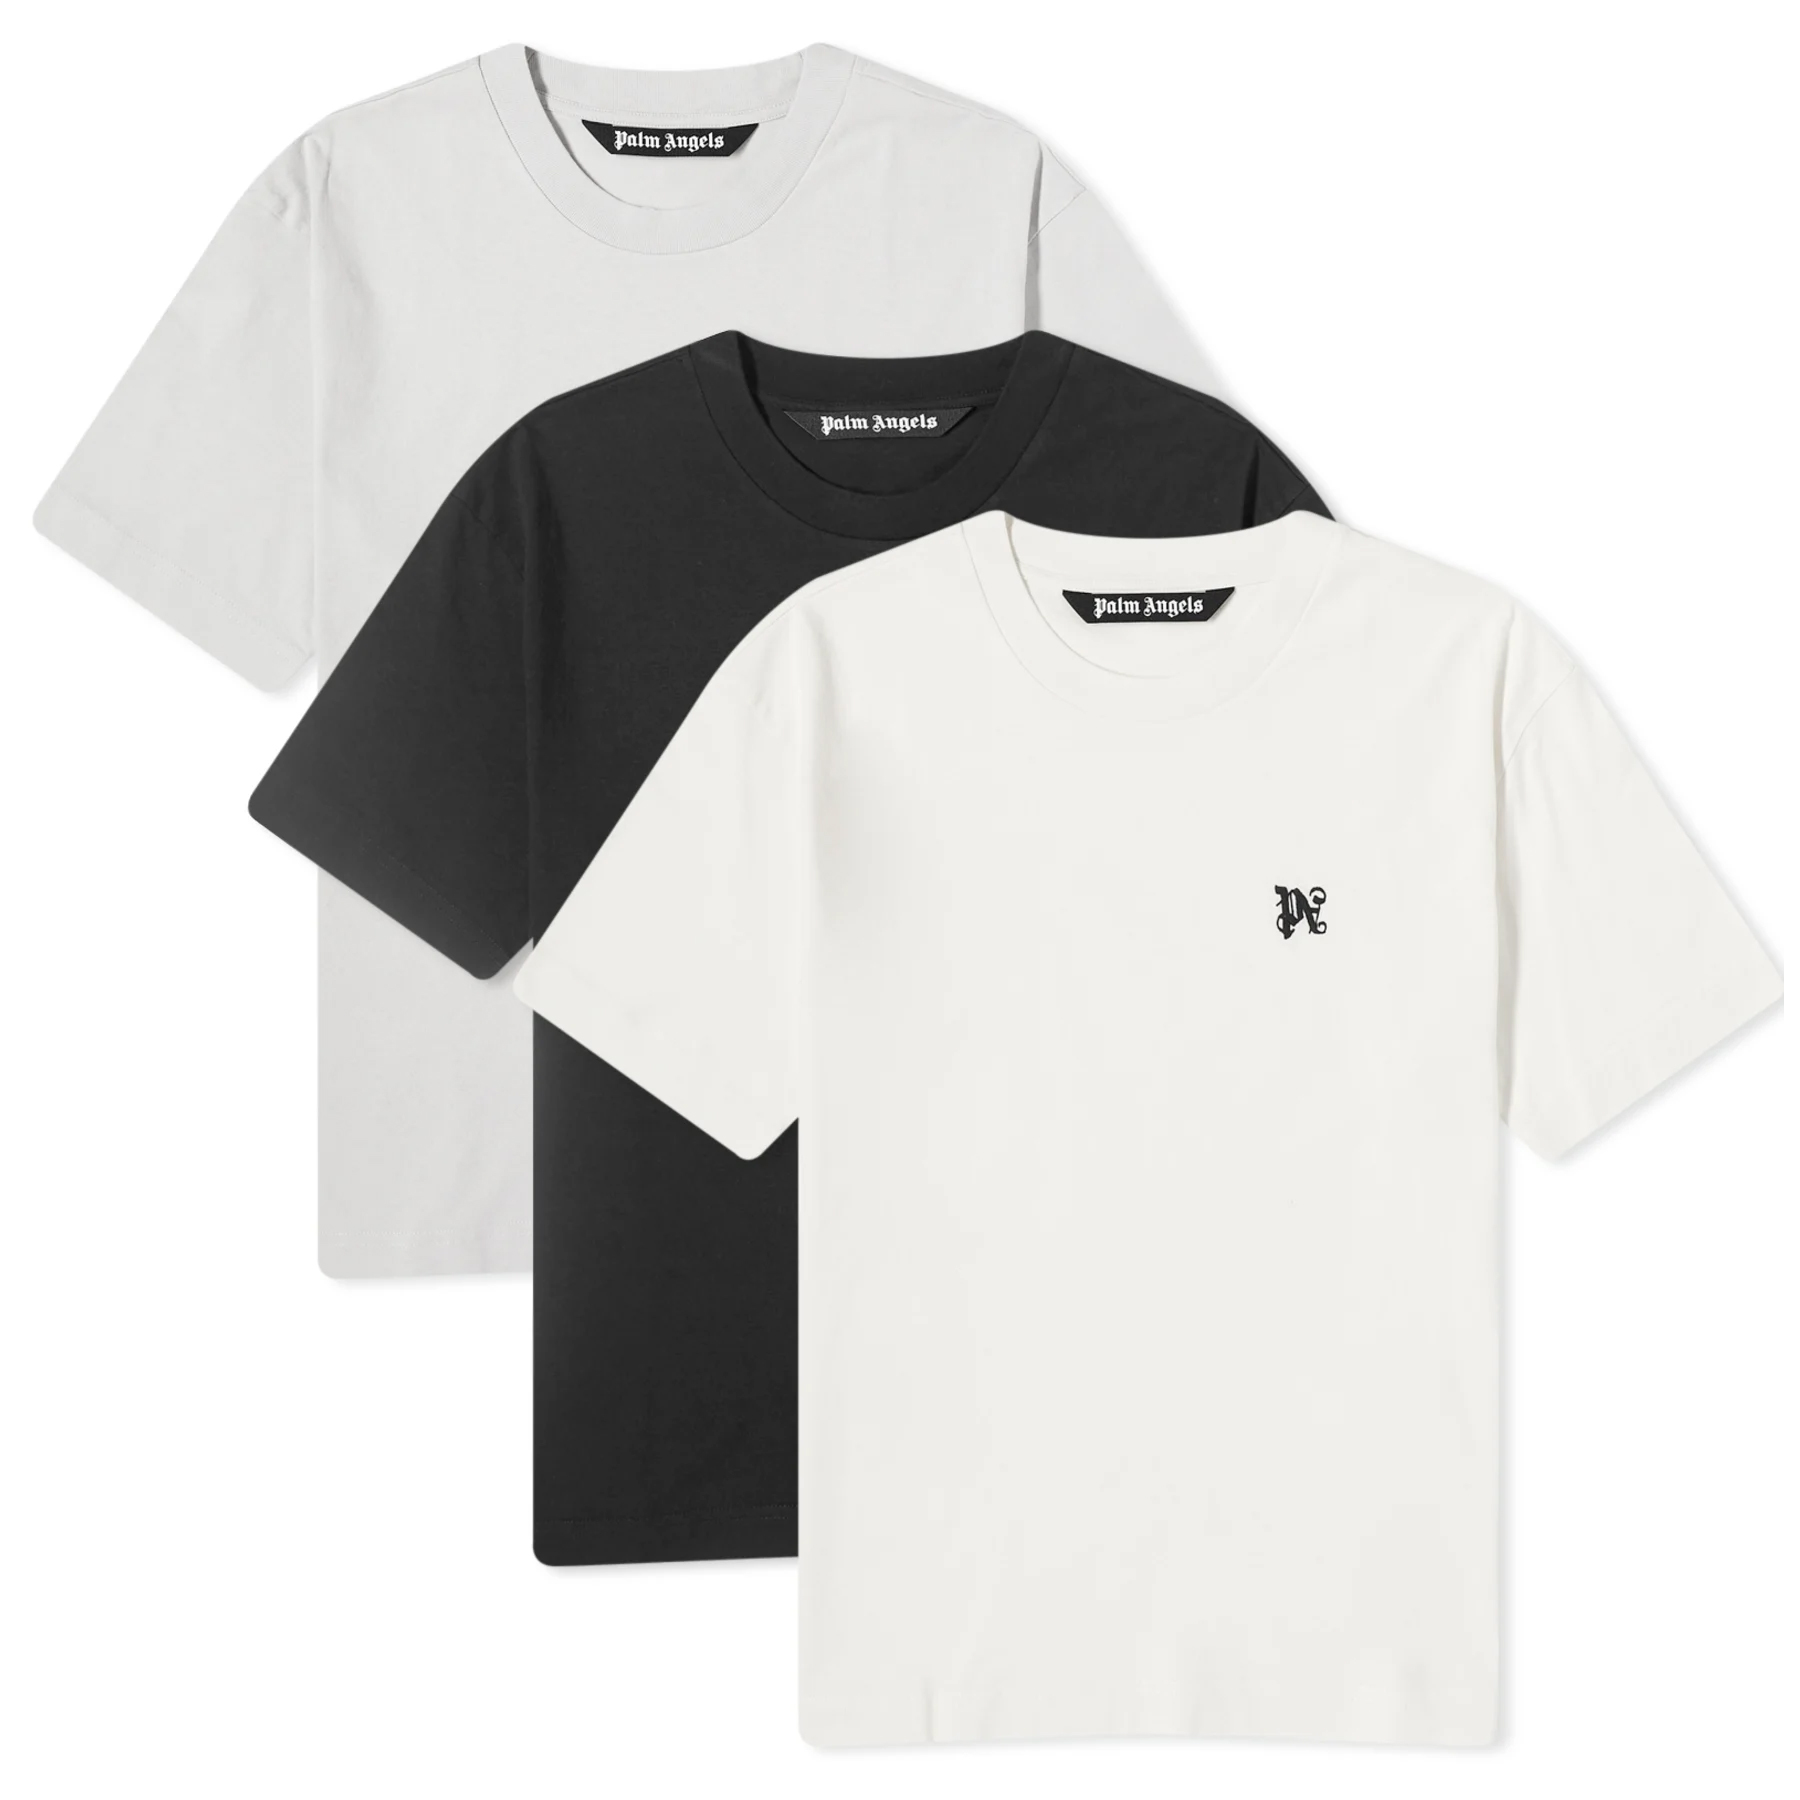 Набор футболок Palm Angels Mini Logo Multi Pack Tees, 3 штуки